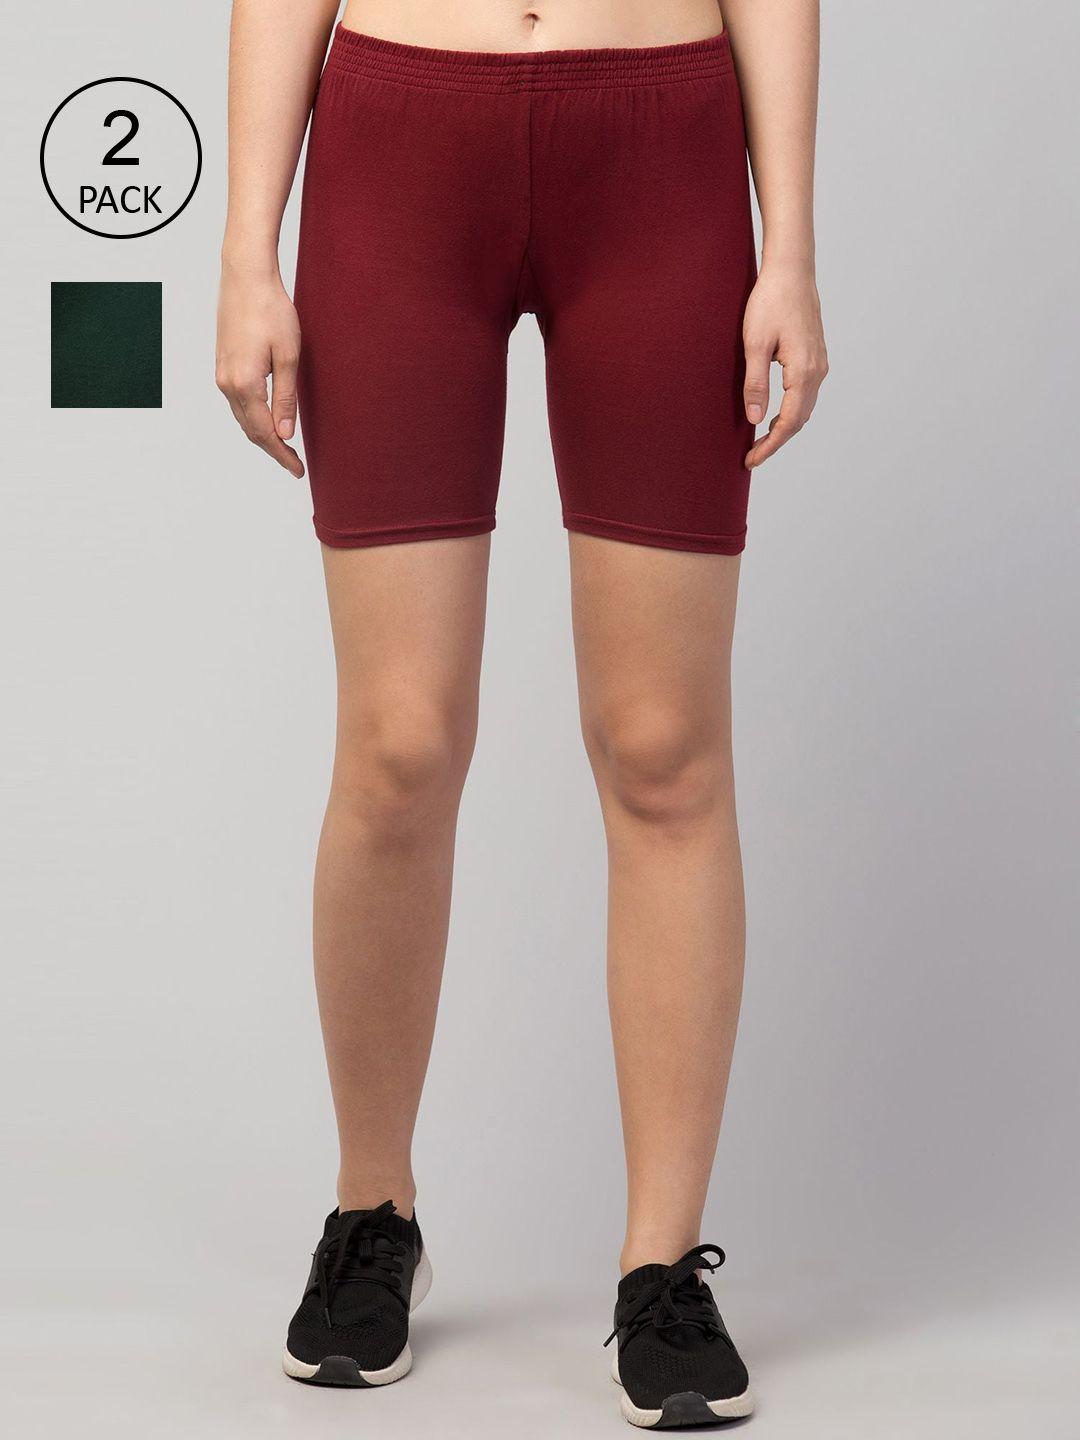 apraa & parma women set of 2 maroon & green slim fit cycling sports shorts